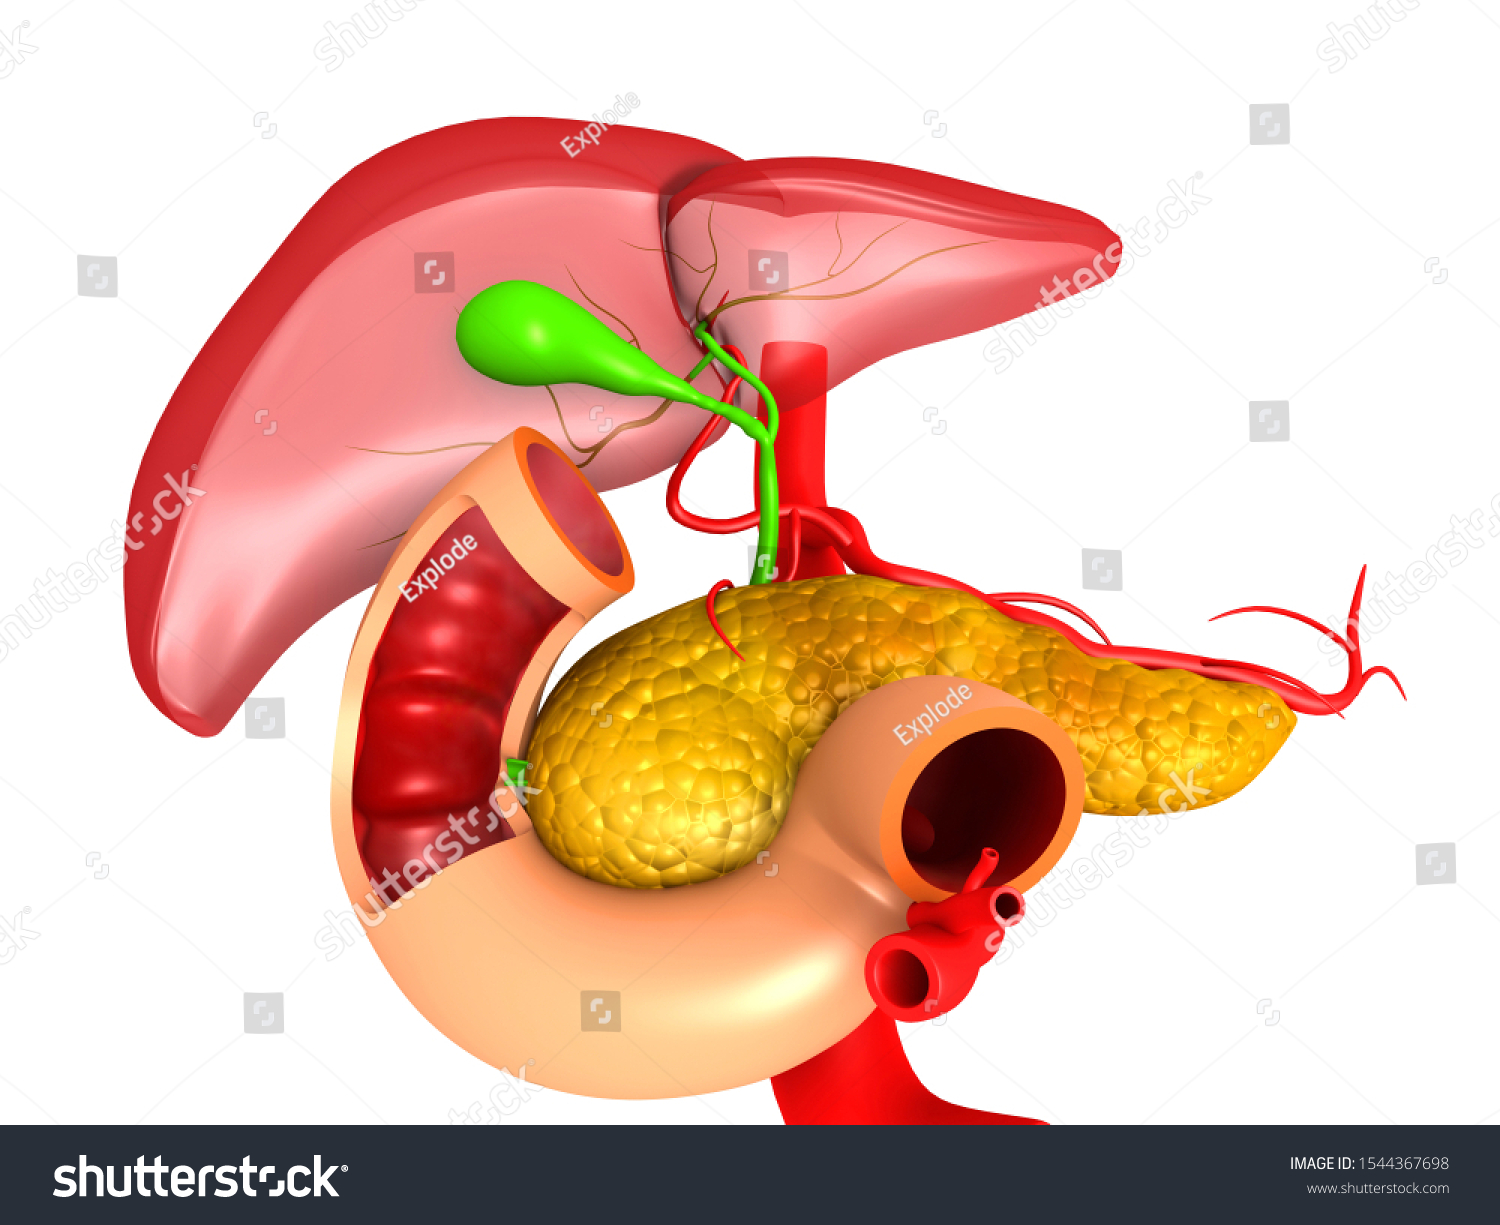 Human Liver Pancreas Anatomy 3d Render Stock Illustration 1544367698 ...